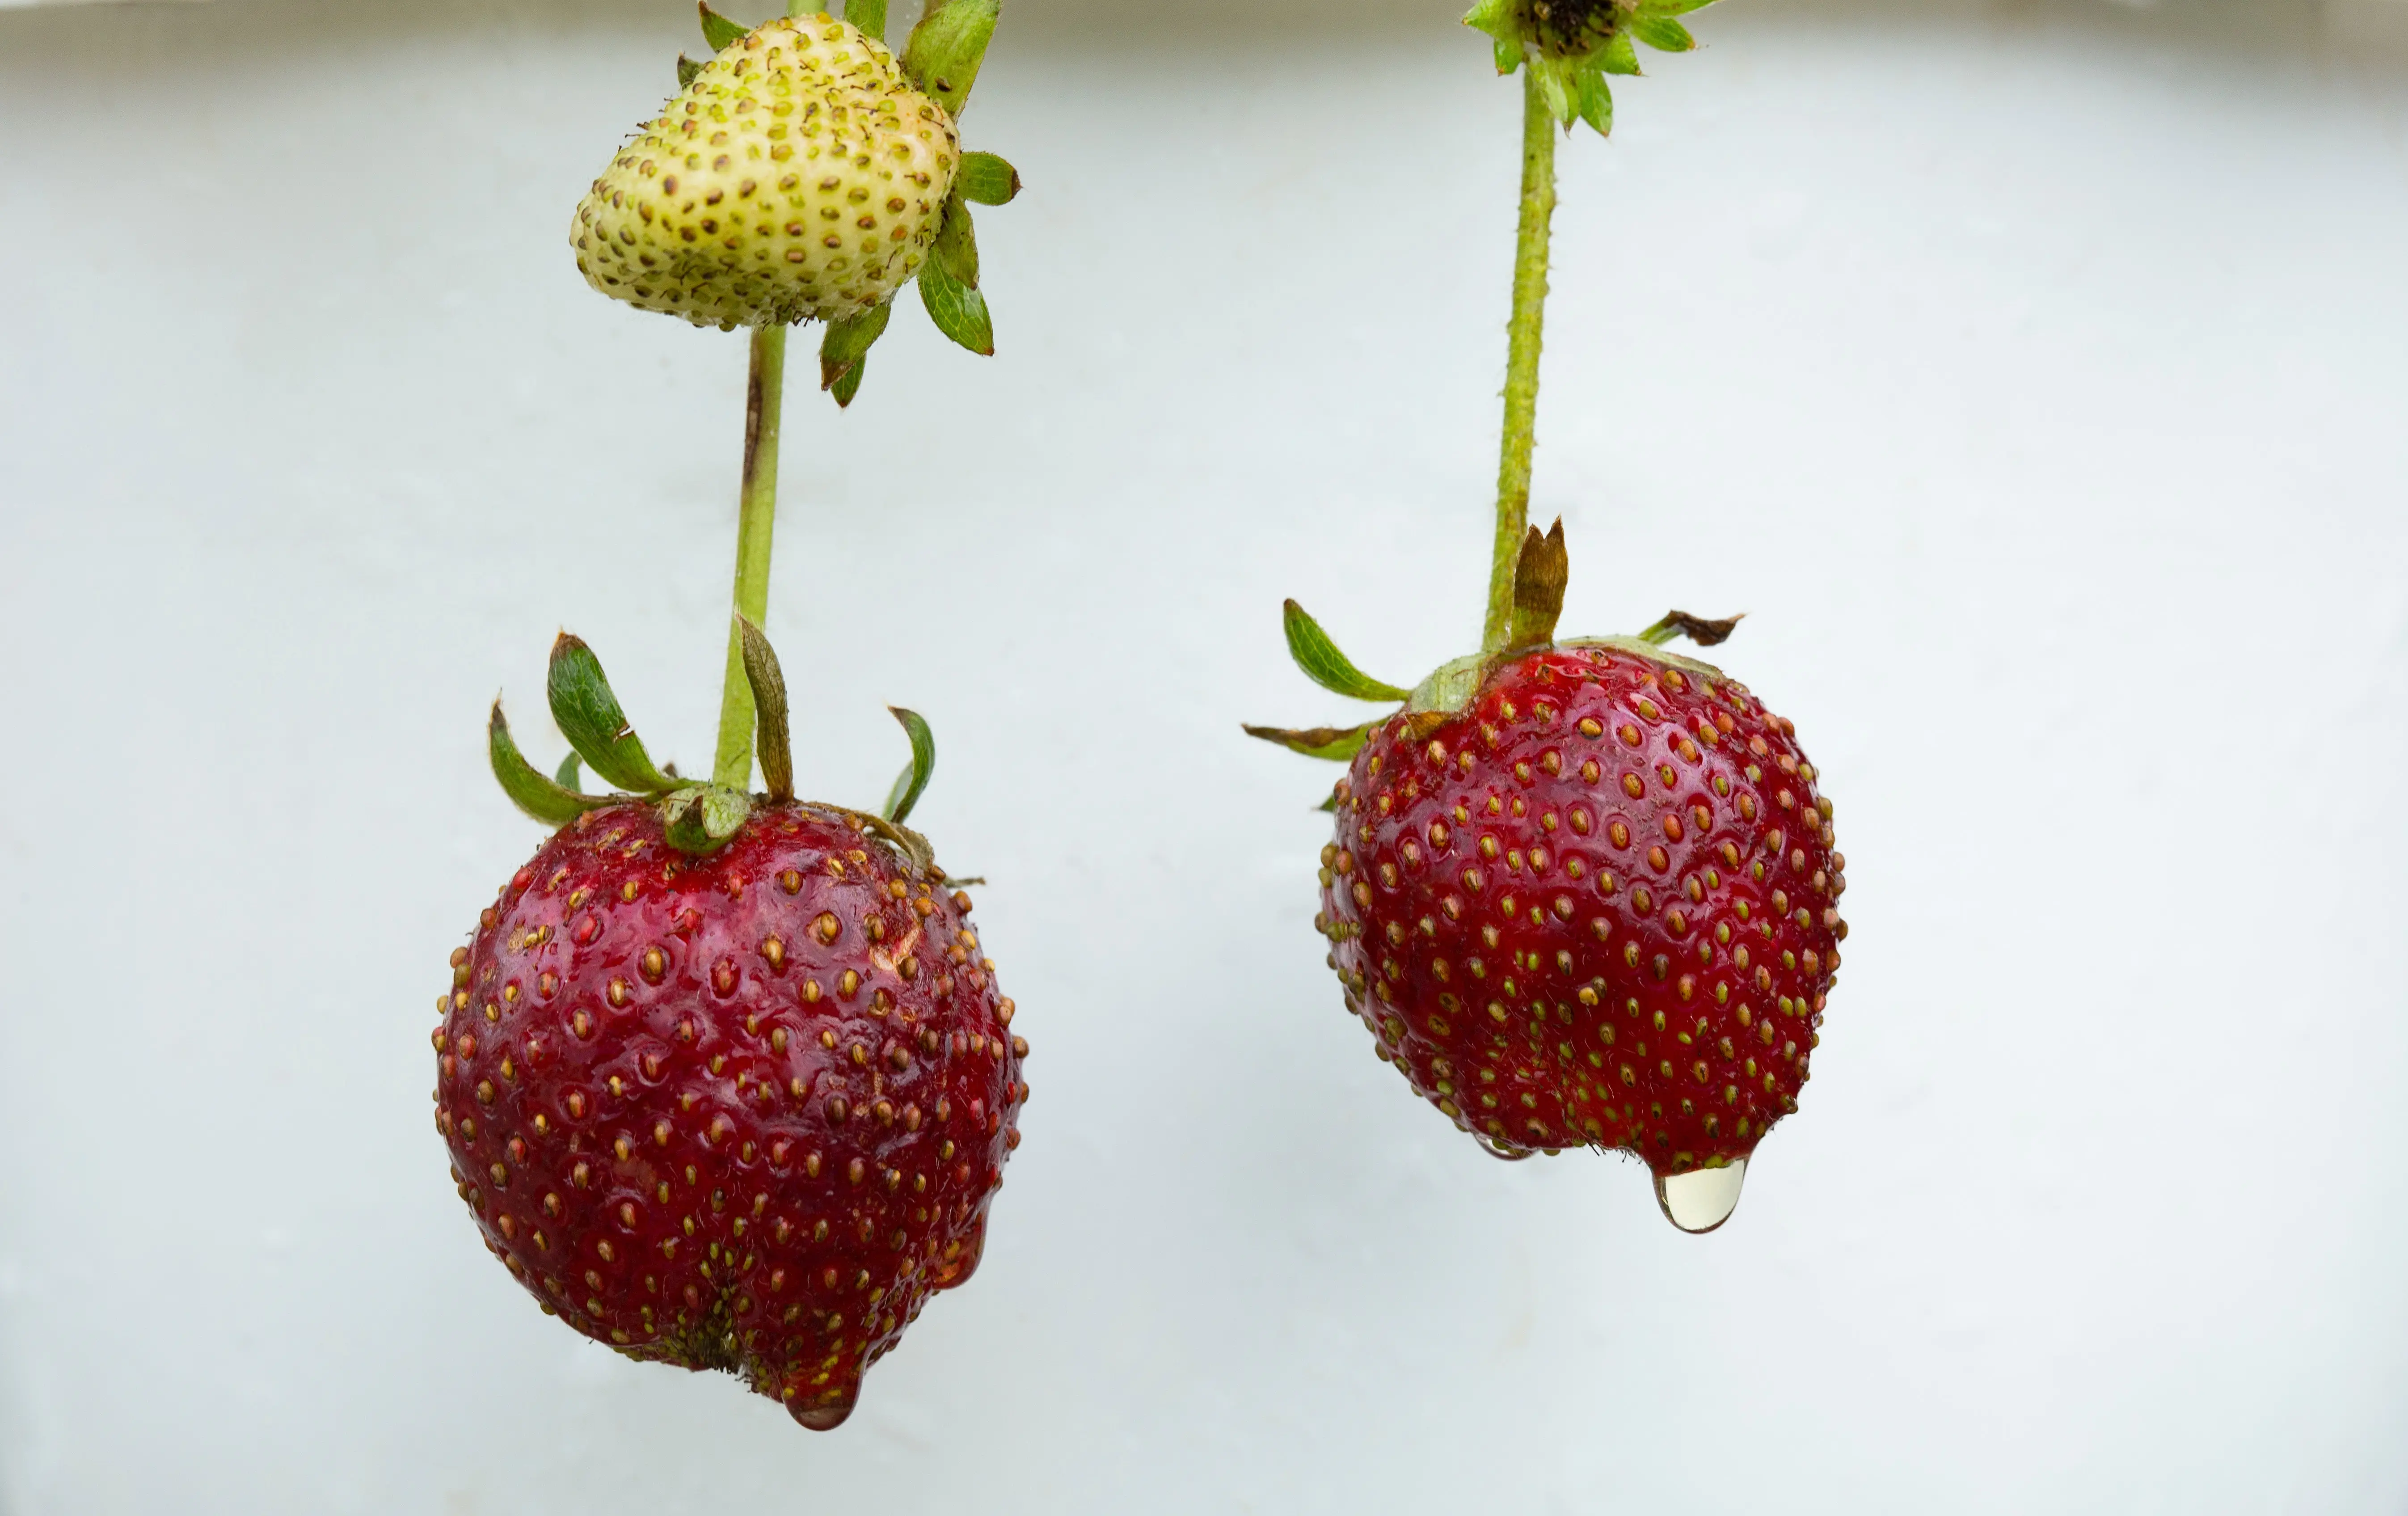 Buah strawberry merah mengandung vitamin A